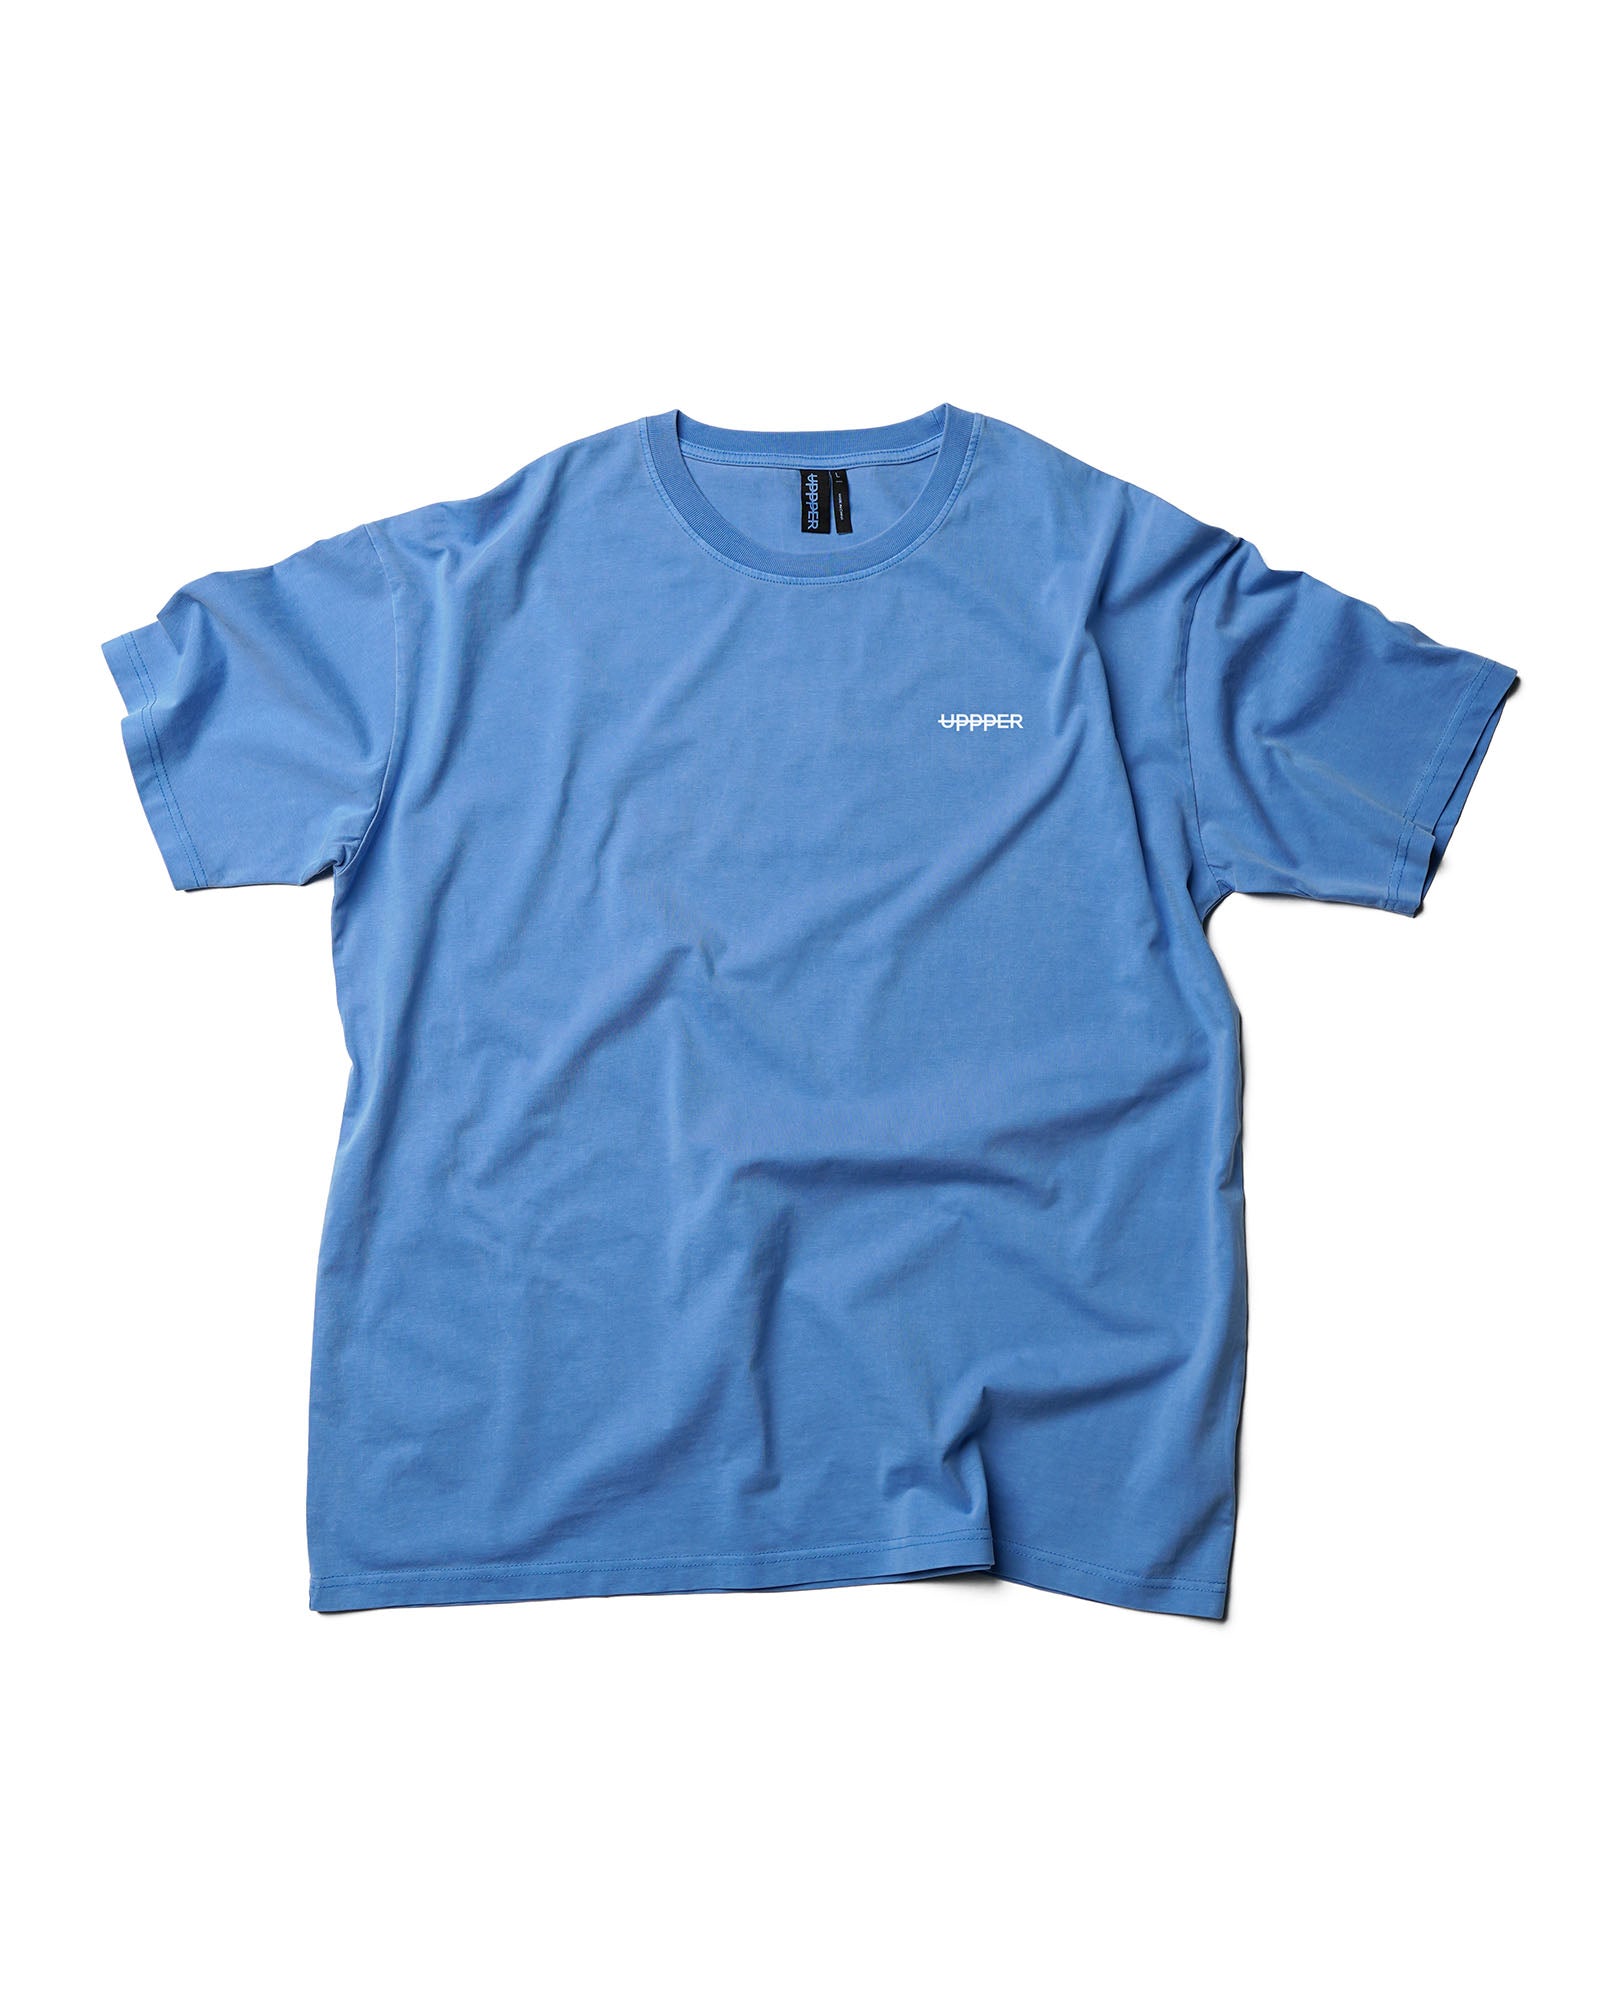 uppper premium fitness t-shirt blue